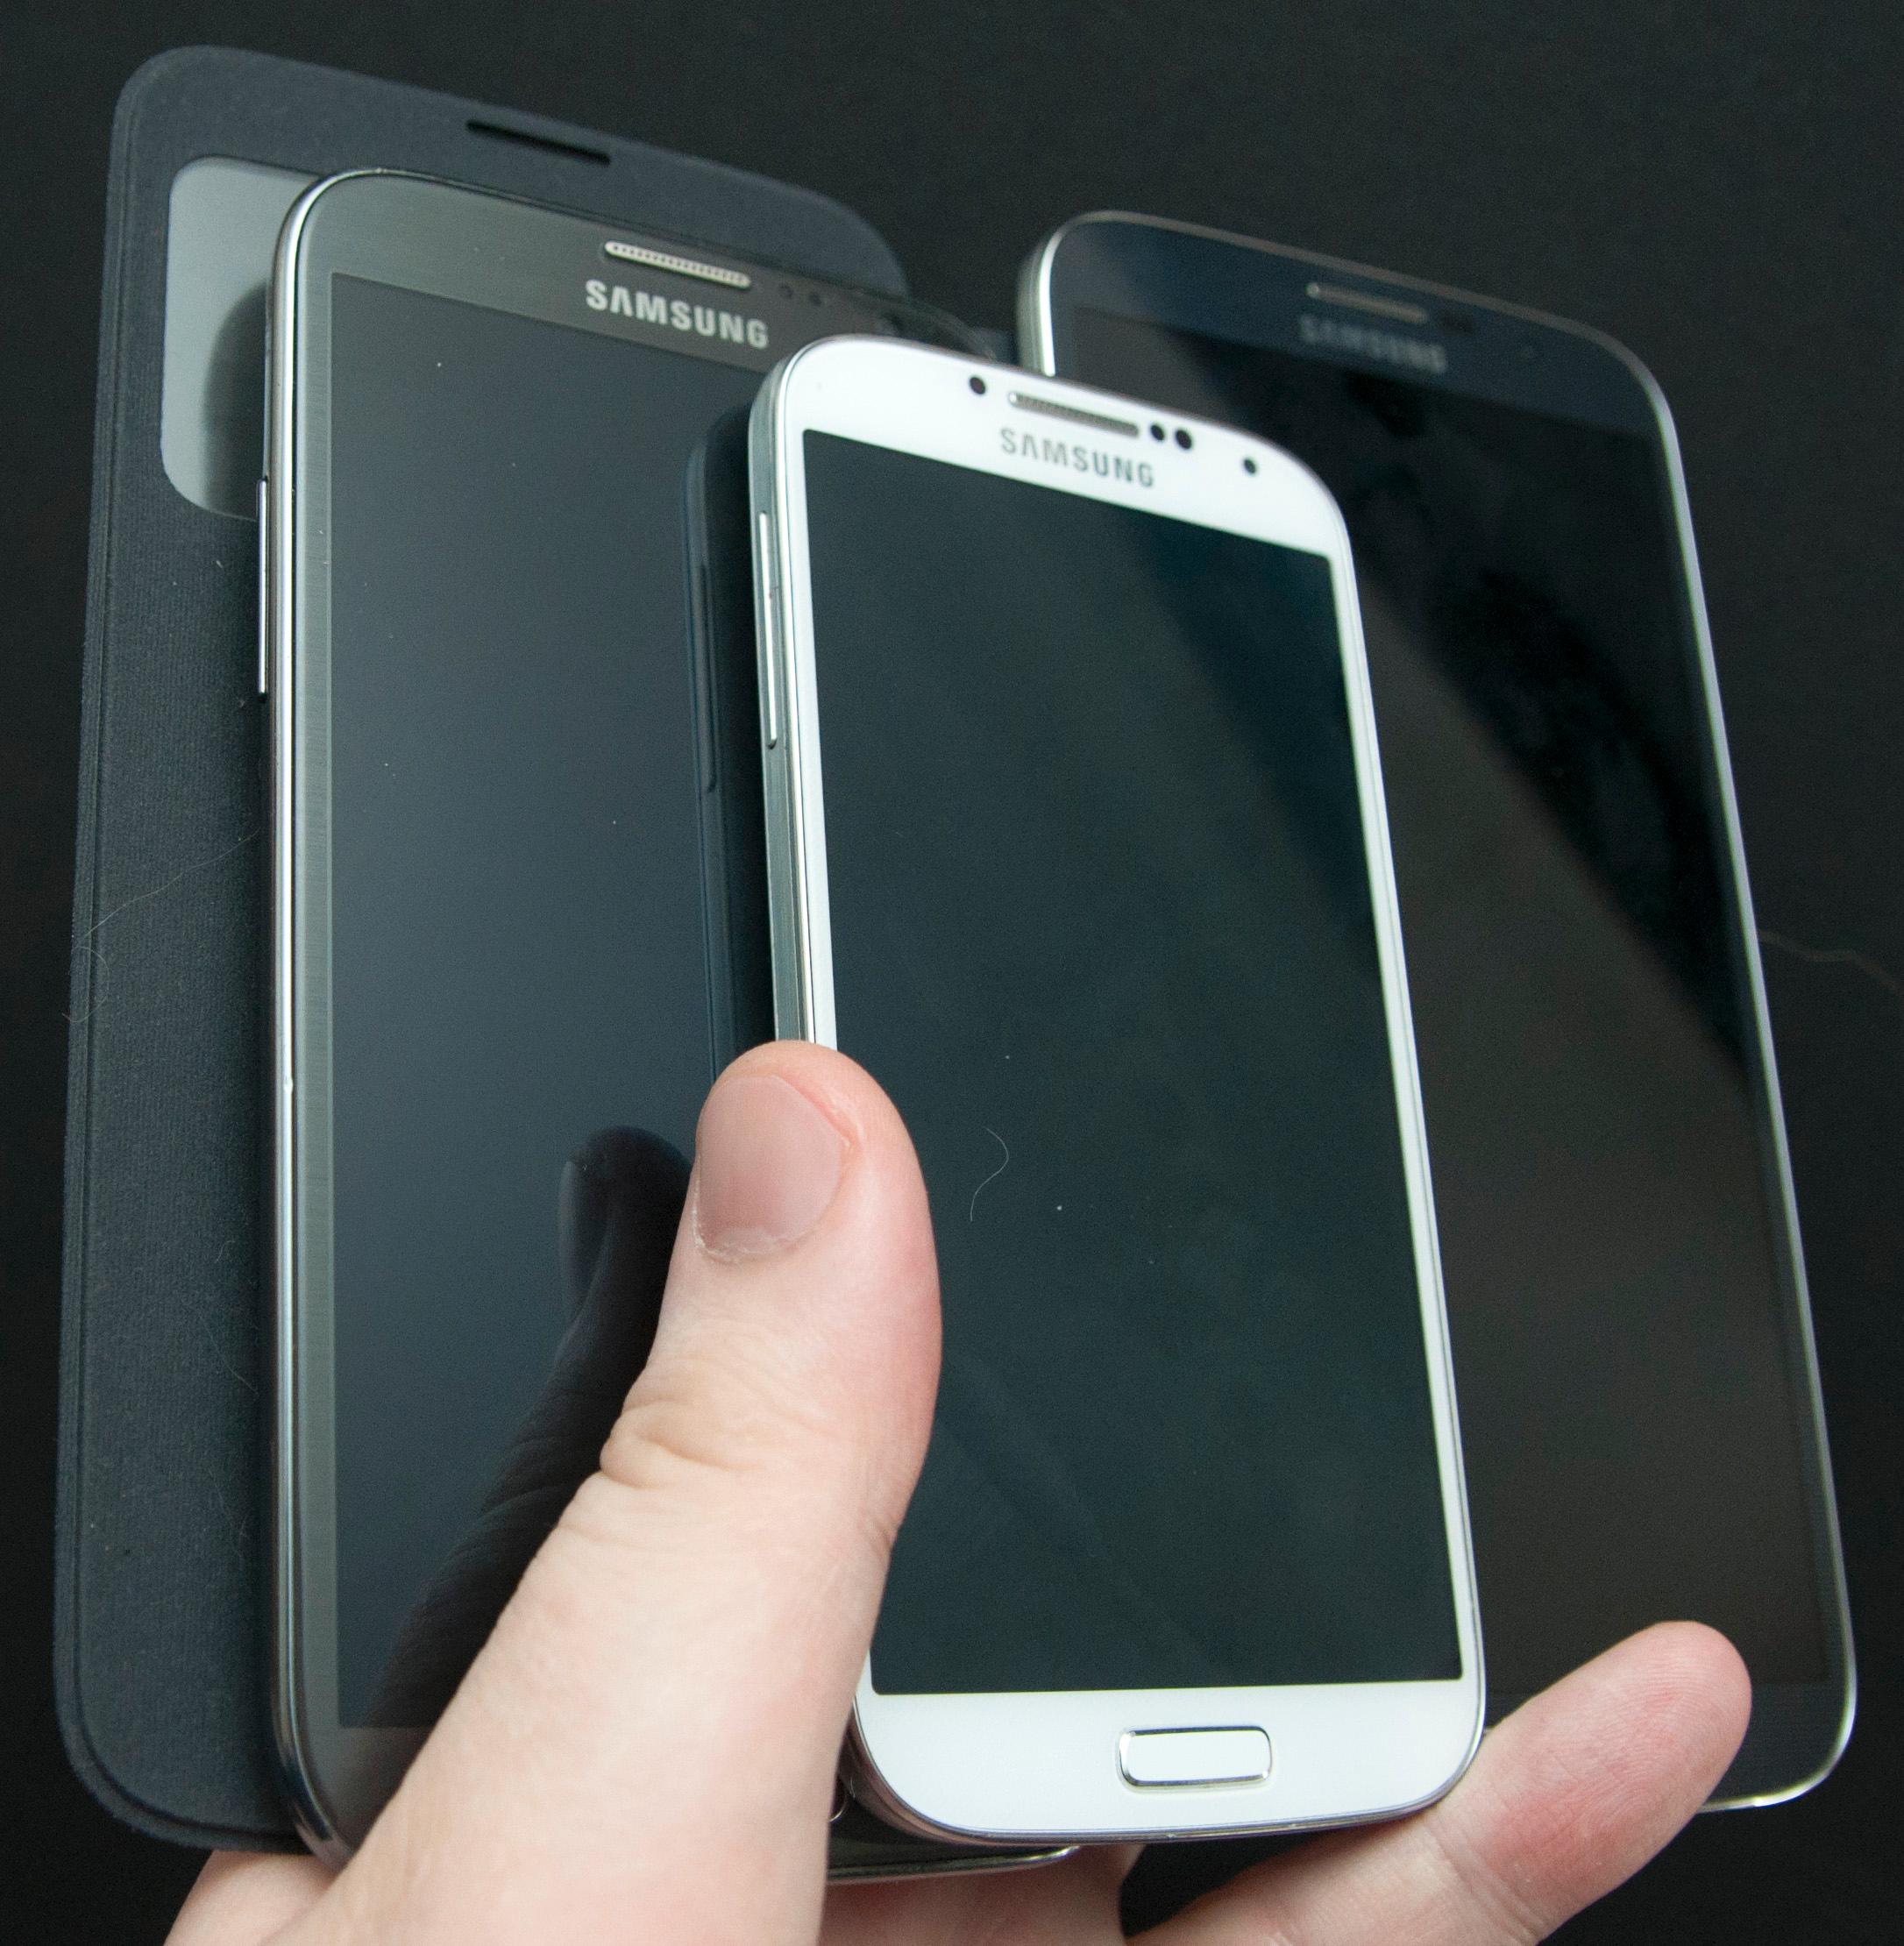 Galaxy S4 i midten fremst. Galaxy Note II til venstre. Galaxy Mega er virkelig en diger telefon.Foto: Finn Jarle Kvalheim, Amobil.no